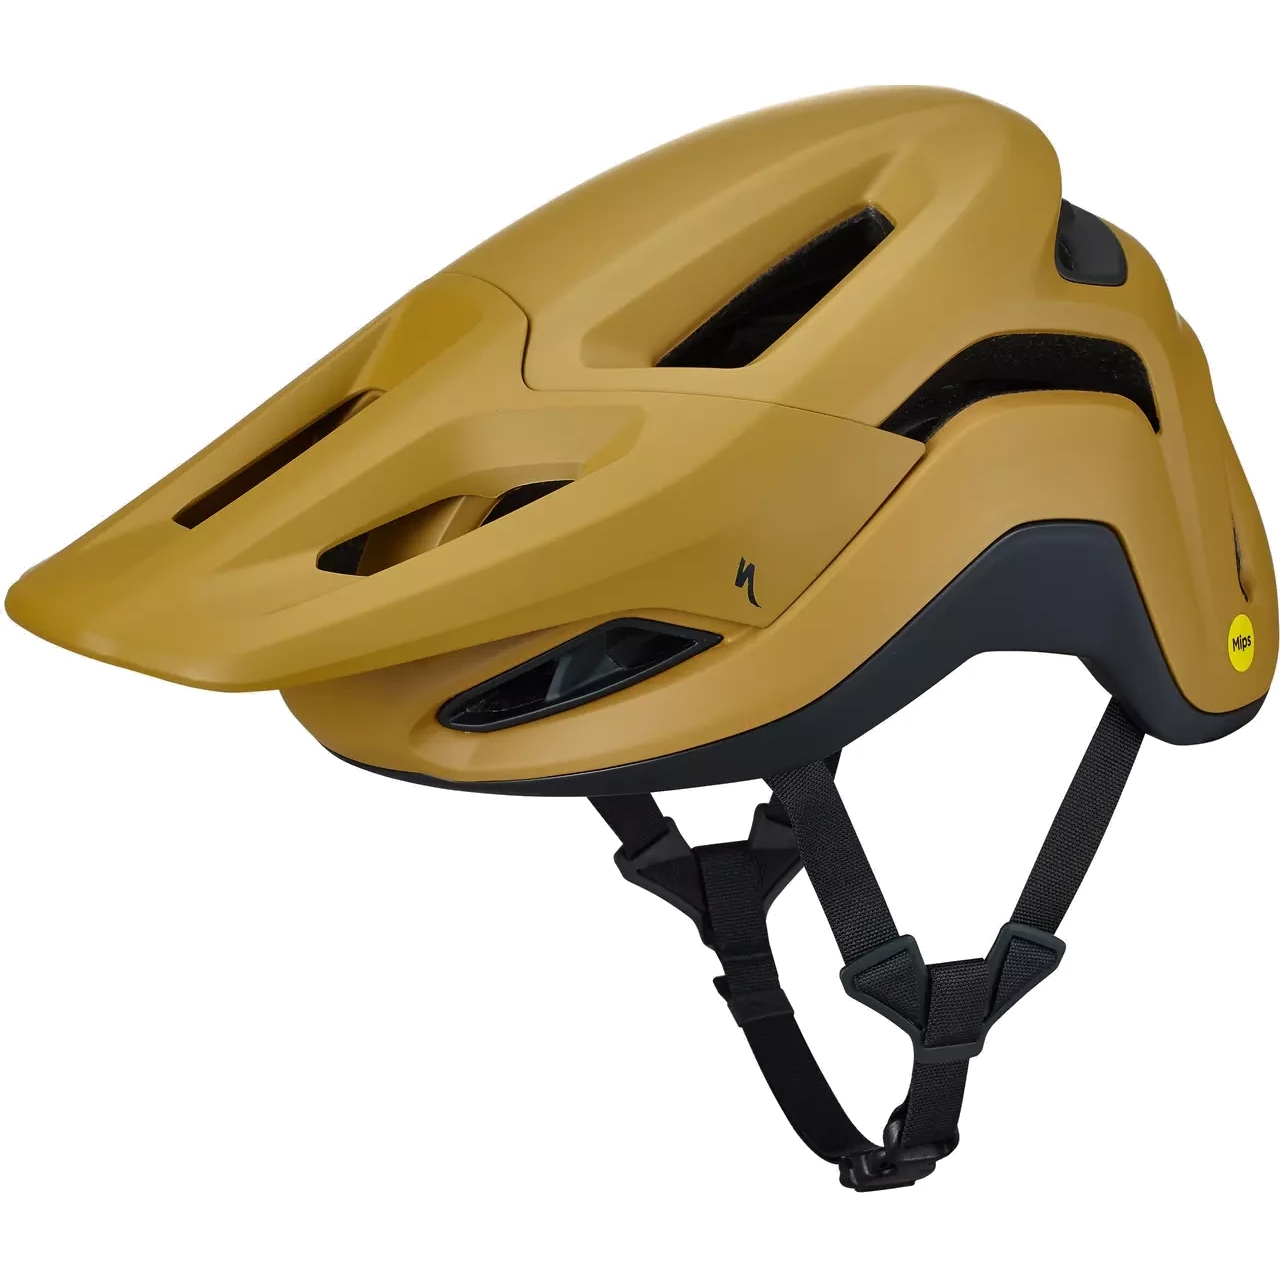 Picture of Specialized Ambush 2 MTB Helmet - Harvest Gold